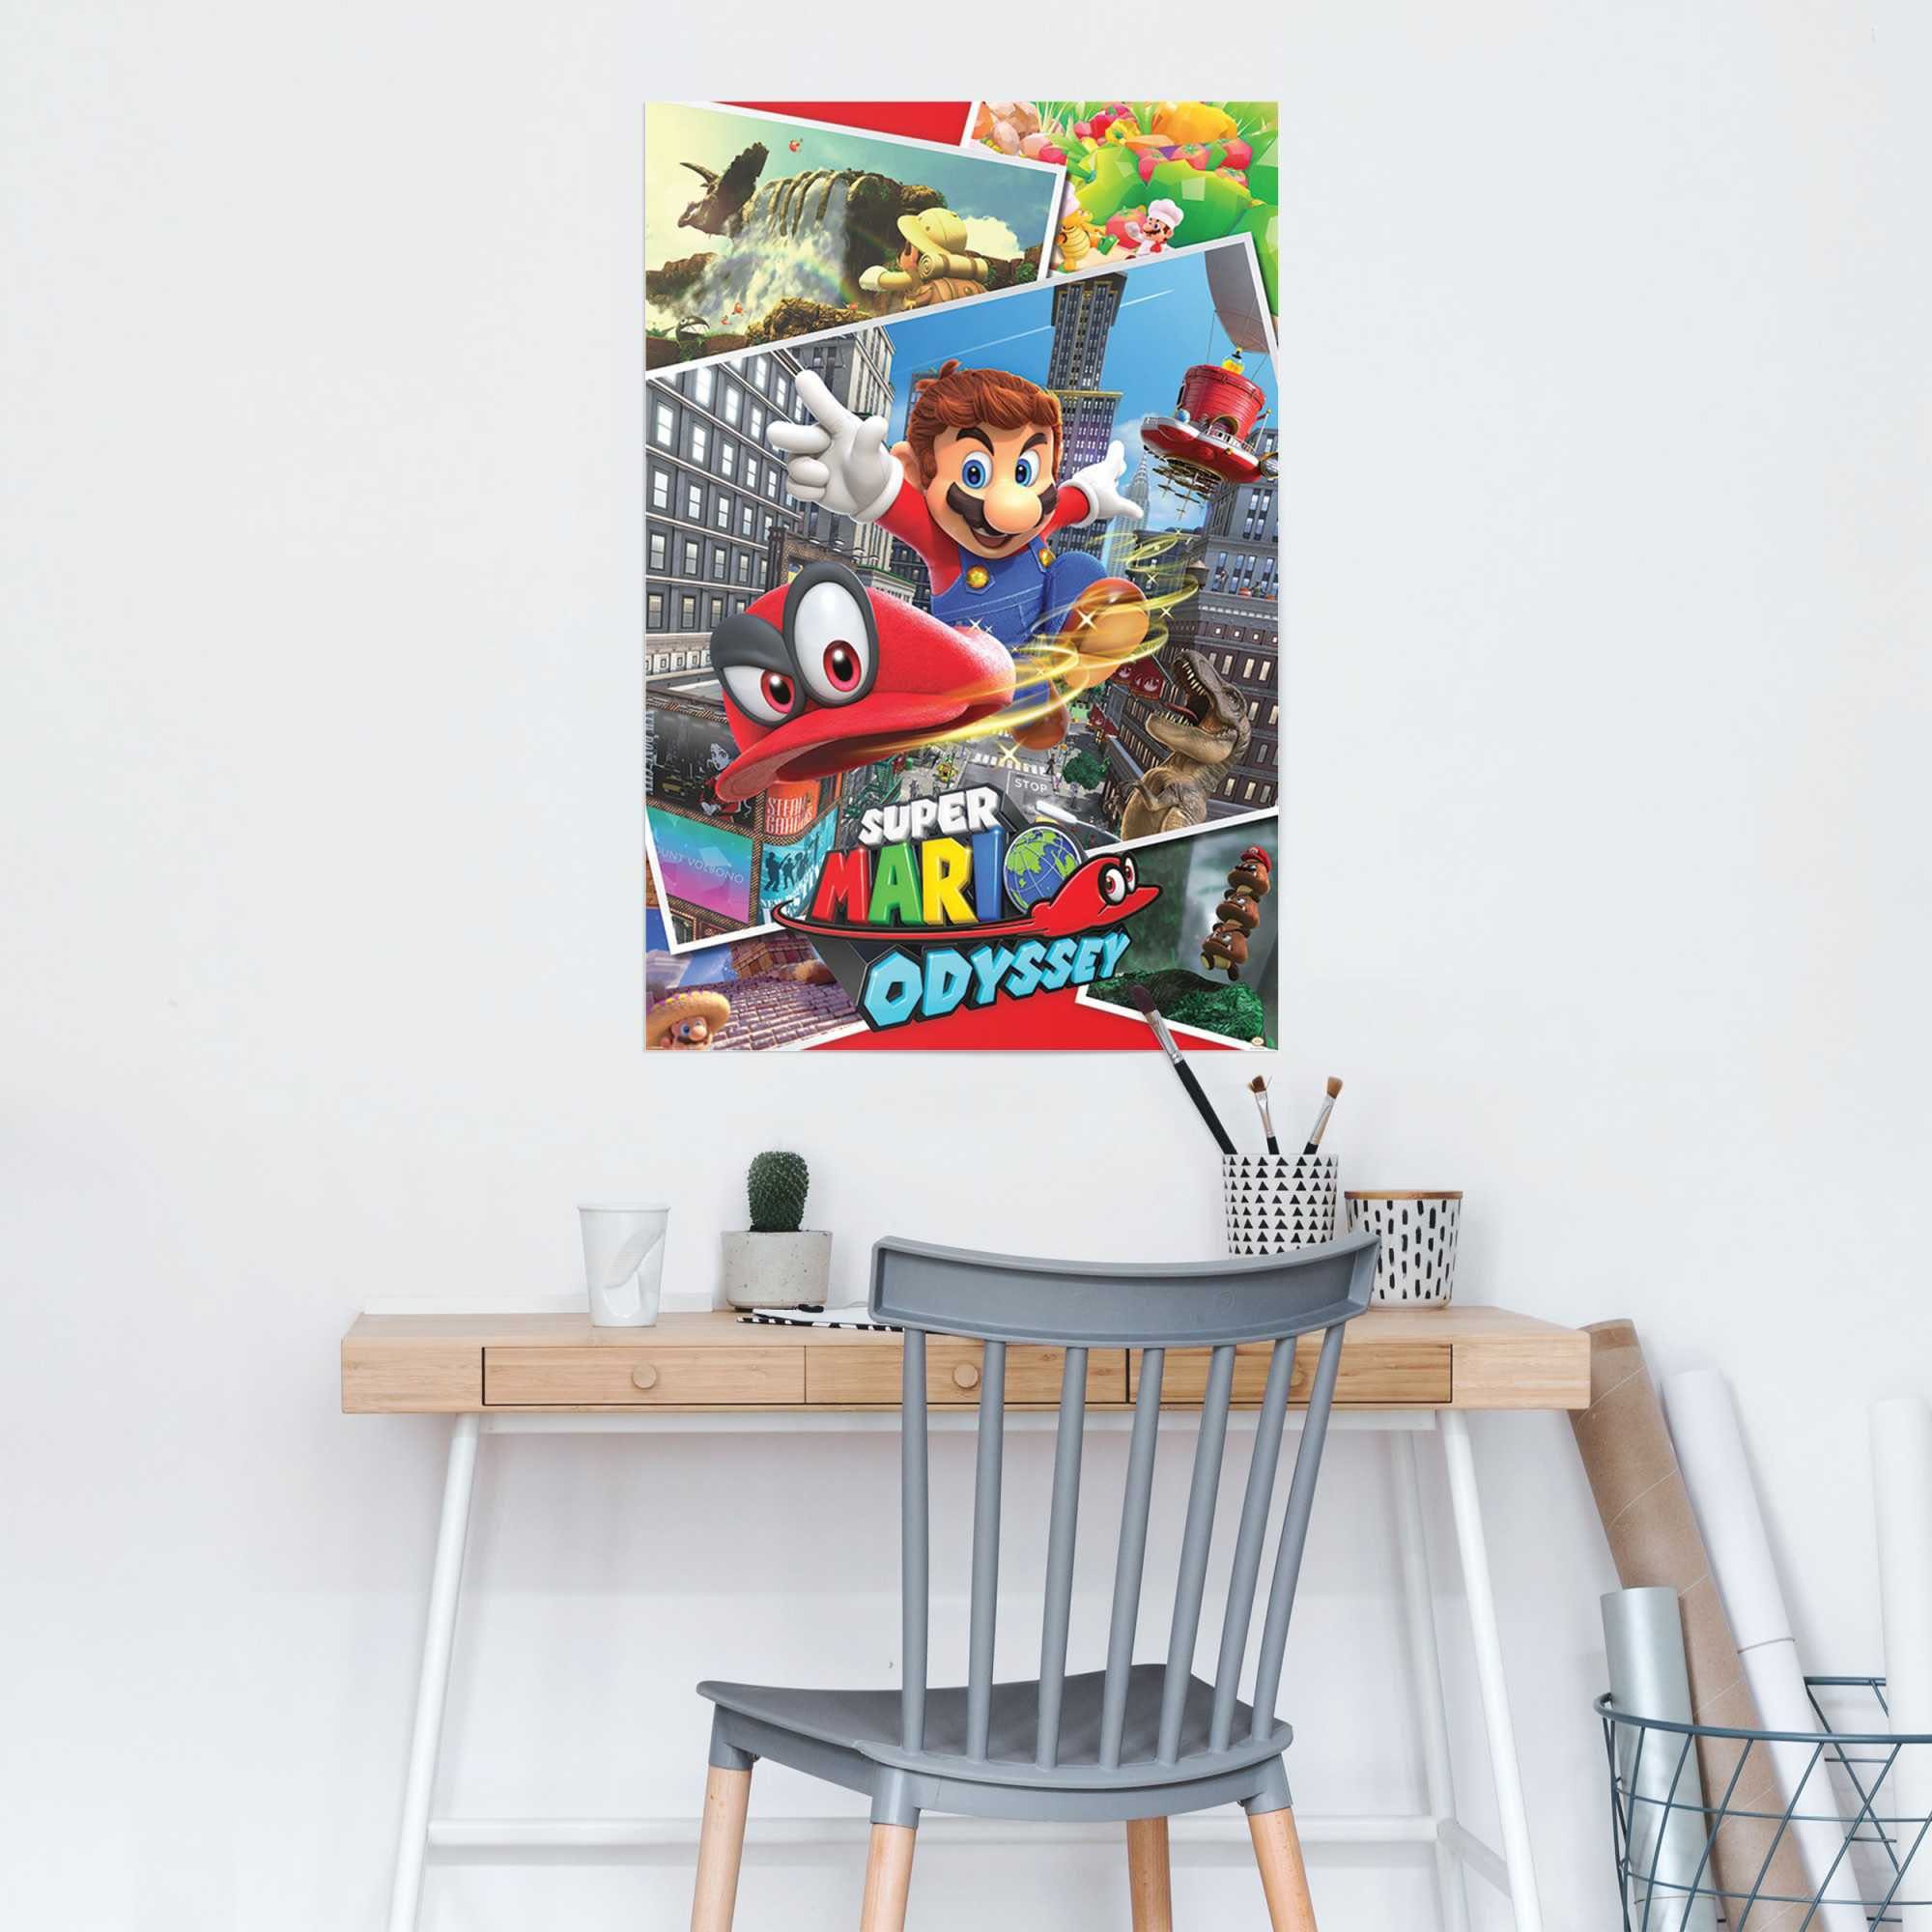 Super (1 Mario Reinders! Odyssey, Poster St)